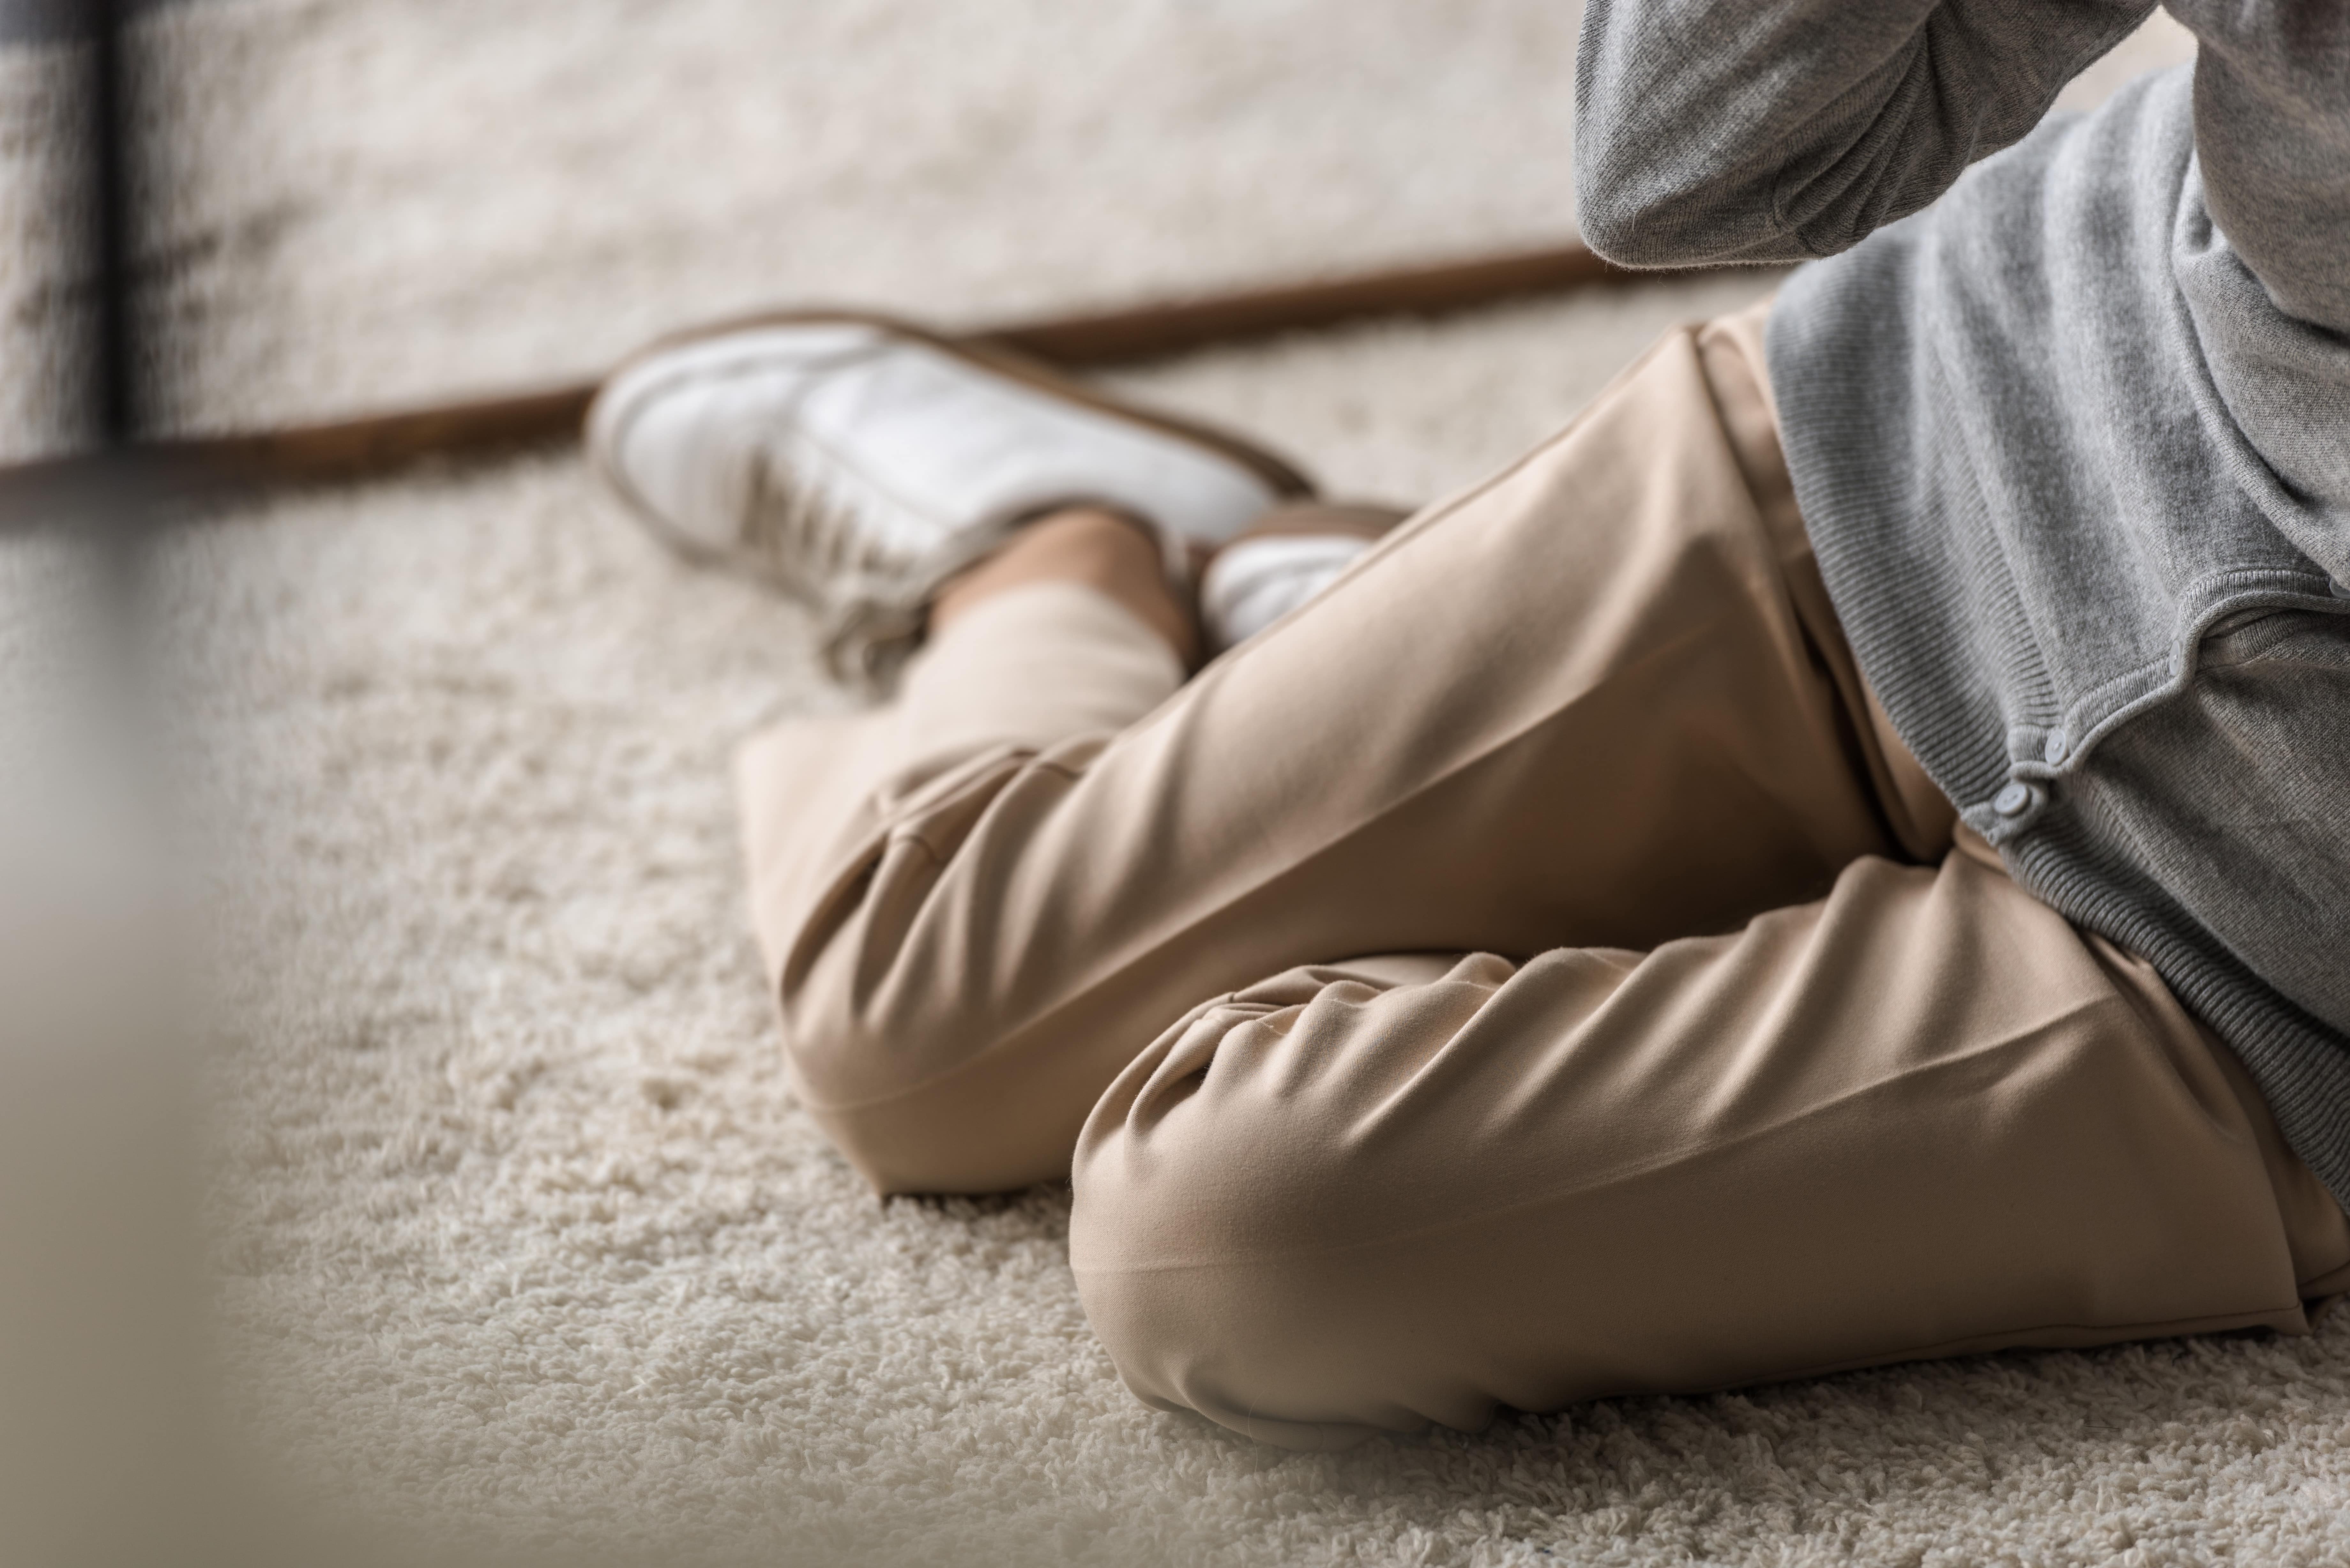 Senior woman legs and feet on carpet, having fallen